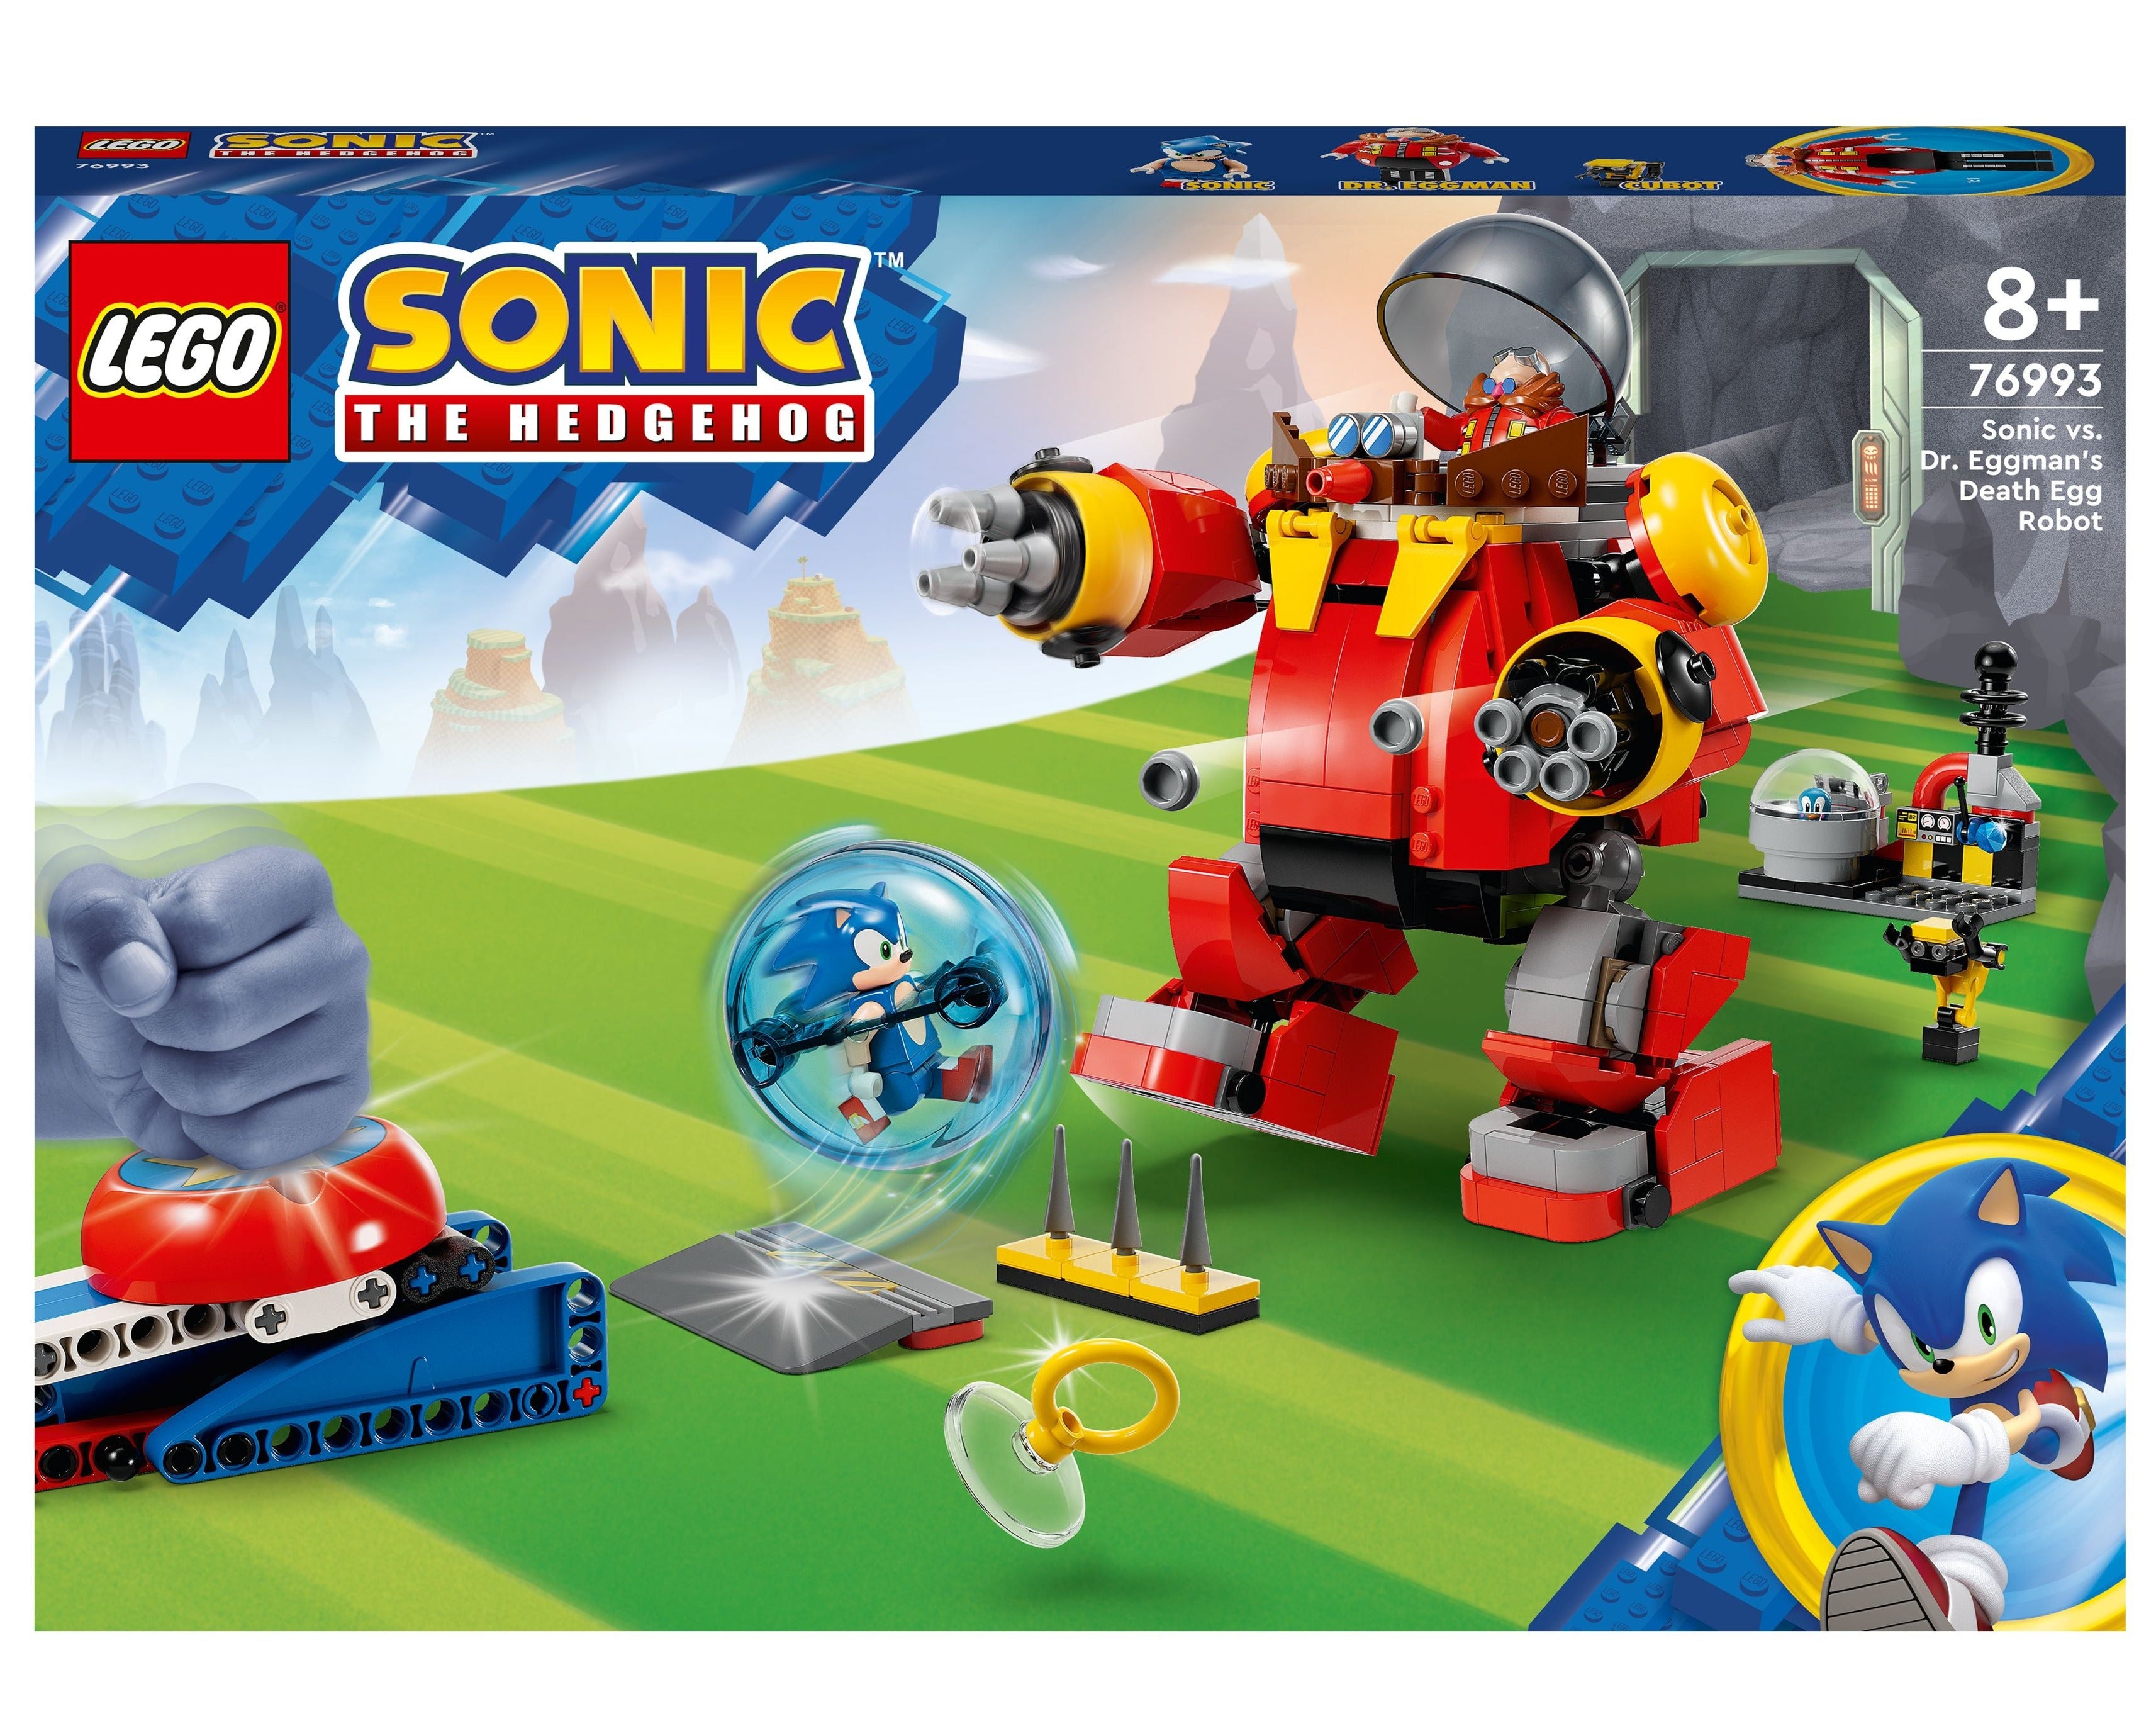 Sonic The Hedgehog 2 en LEGO! 🤩🌀 #Sonic2 